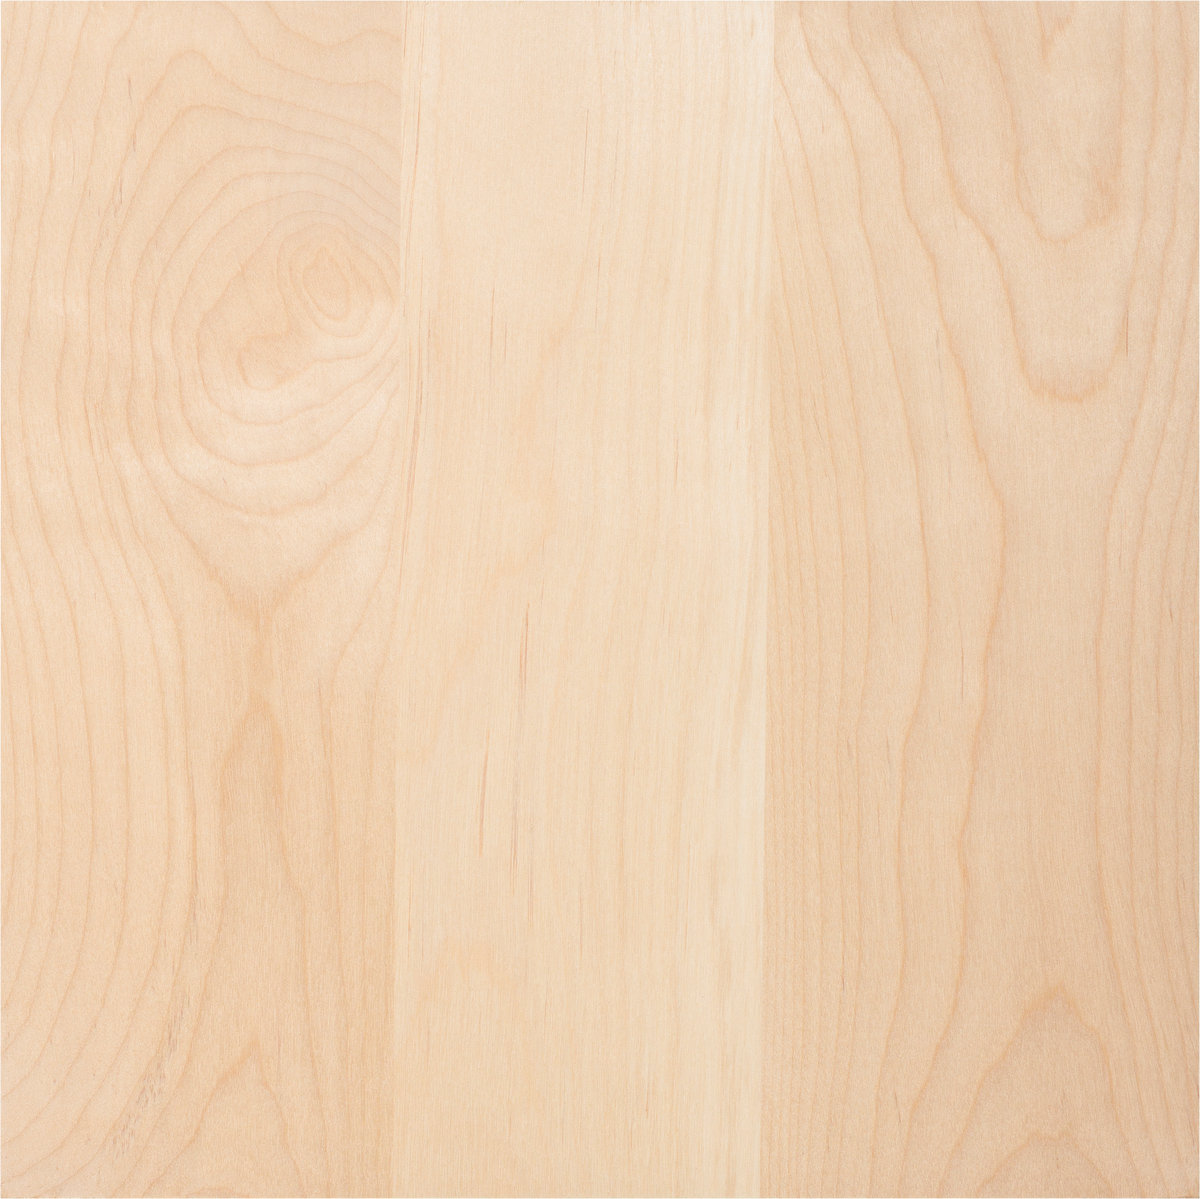 Standard Wood Species | Meridian Products